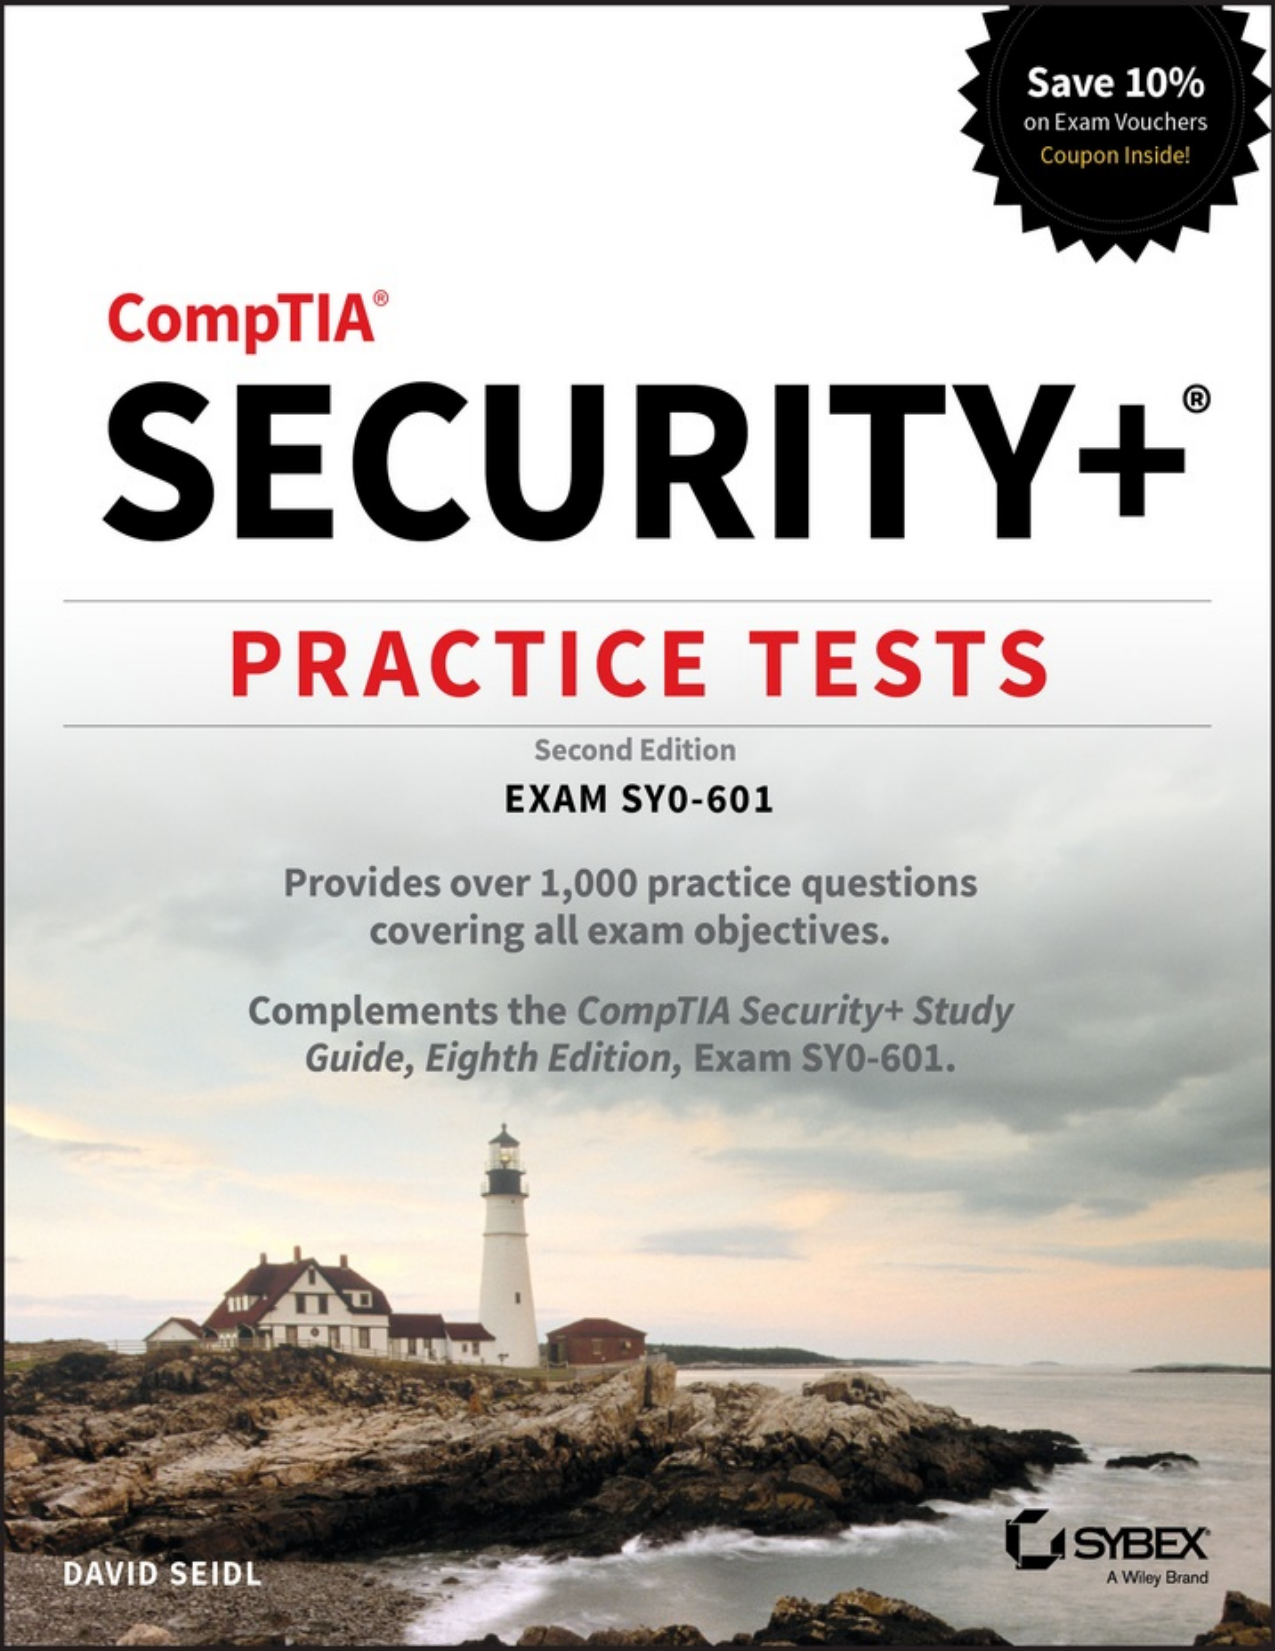 CRT-261 PDF Testsoftware | Sns-Brigh10